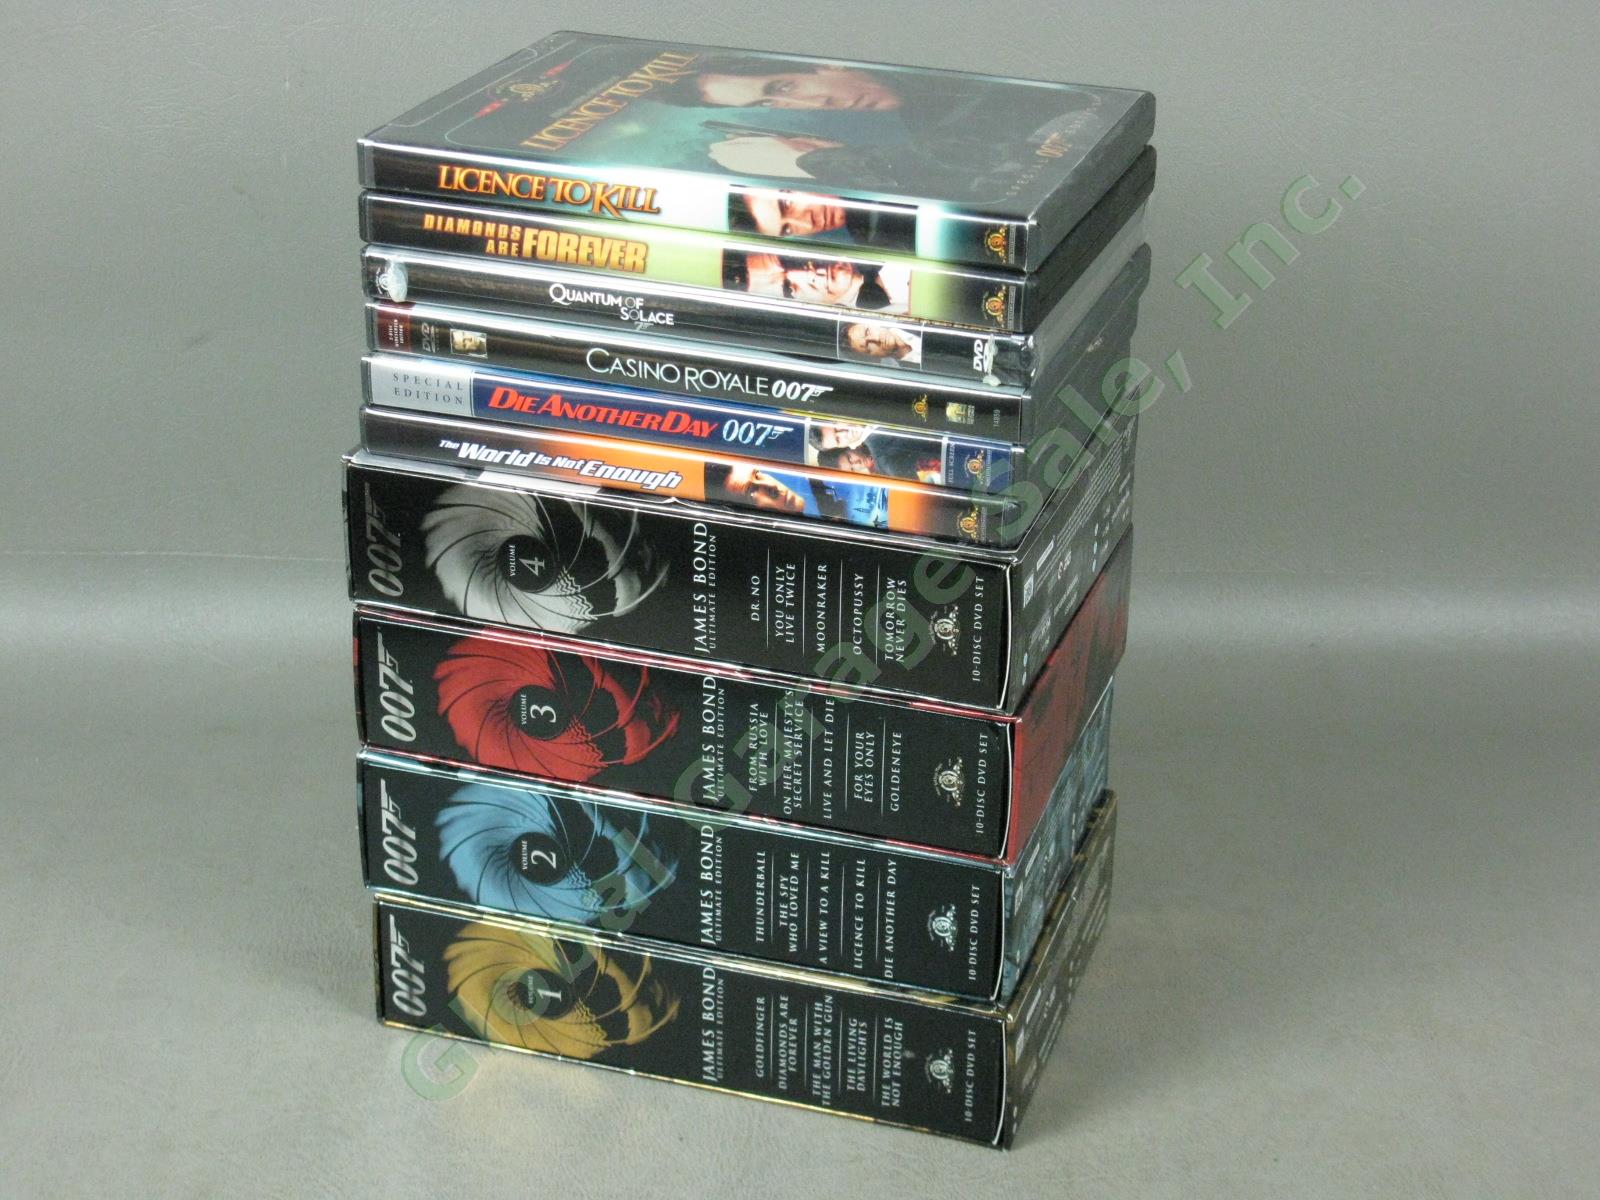 007 James Bond 46-DVD Collection Lot Ultimate Edition Box Sets Volume 1 2 3 4 NR